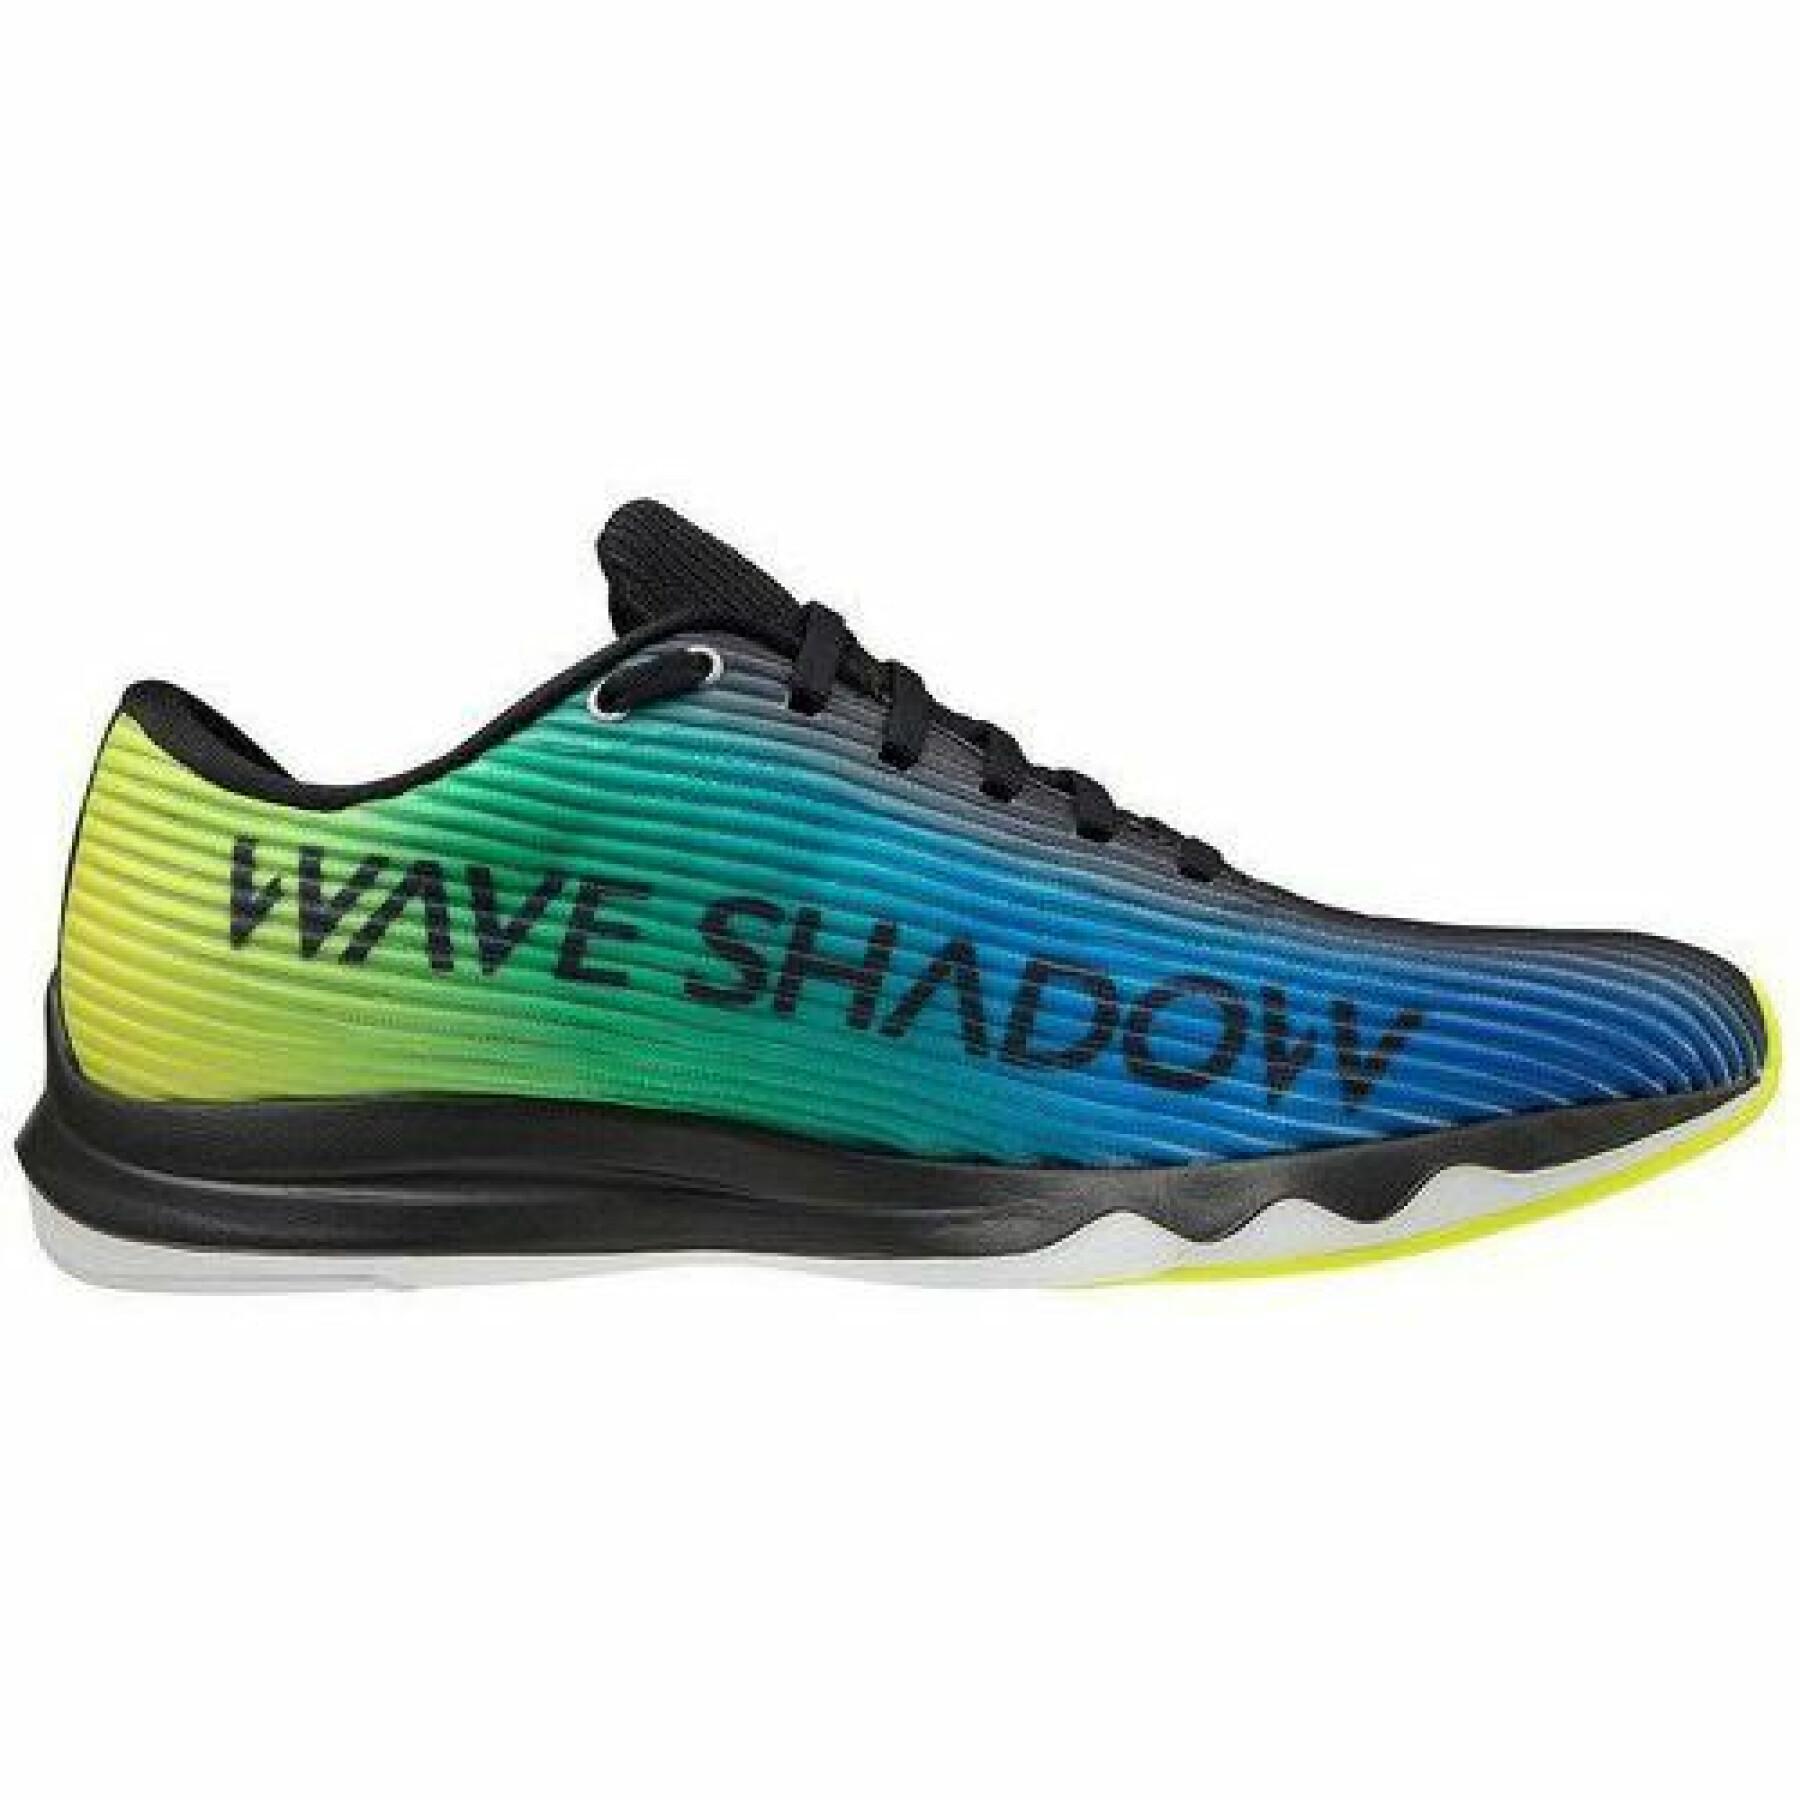 Schoenen Mizuno wave shadow 4